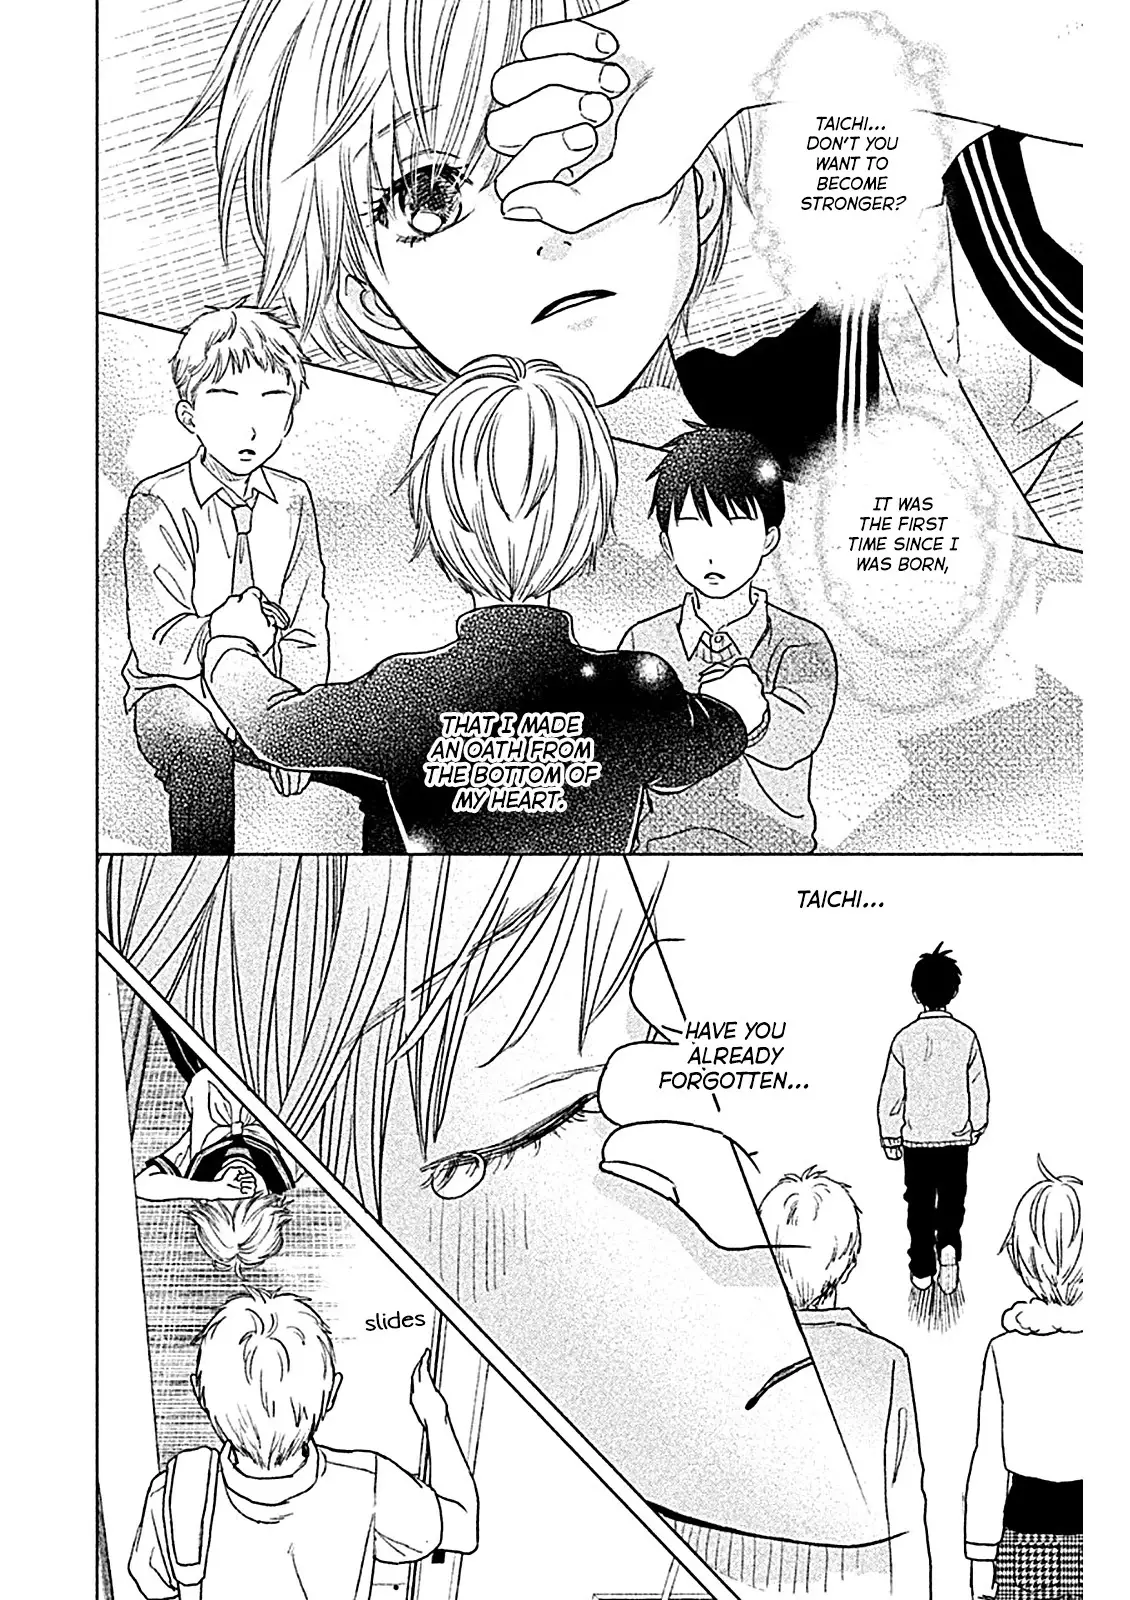 Chihayafuru: Middle School Arc - 1 page 14